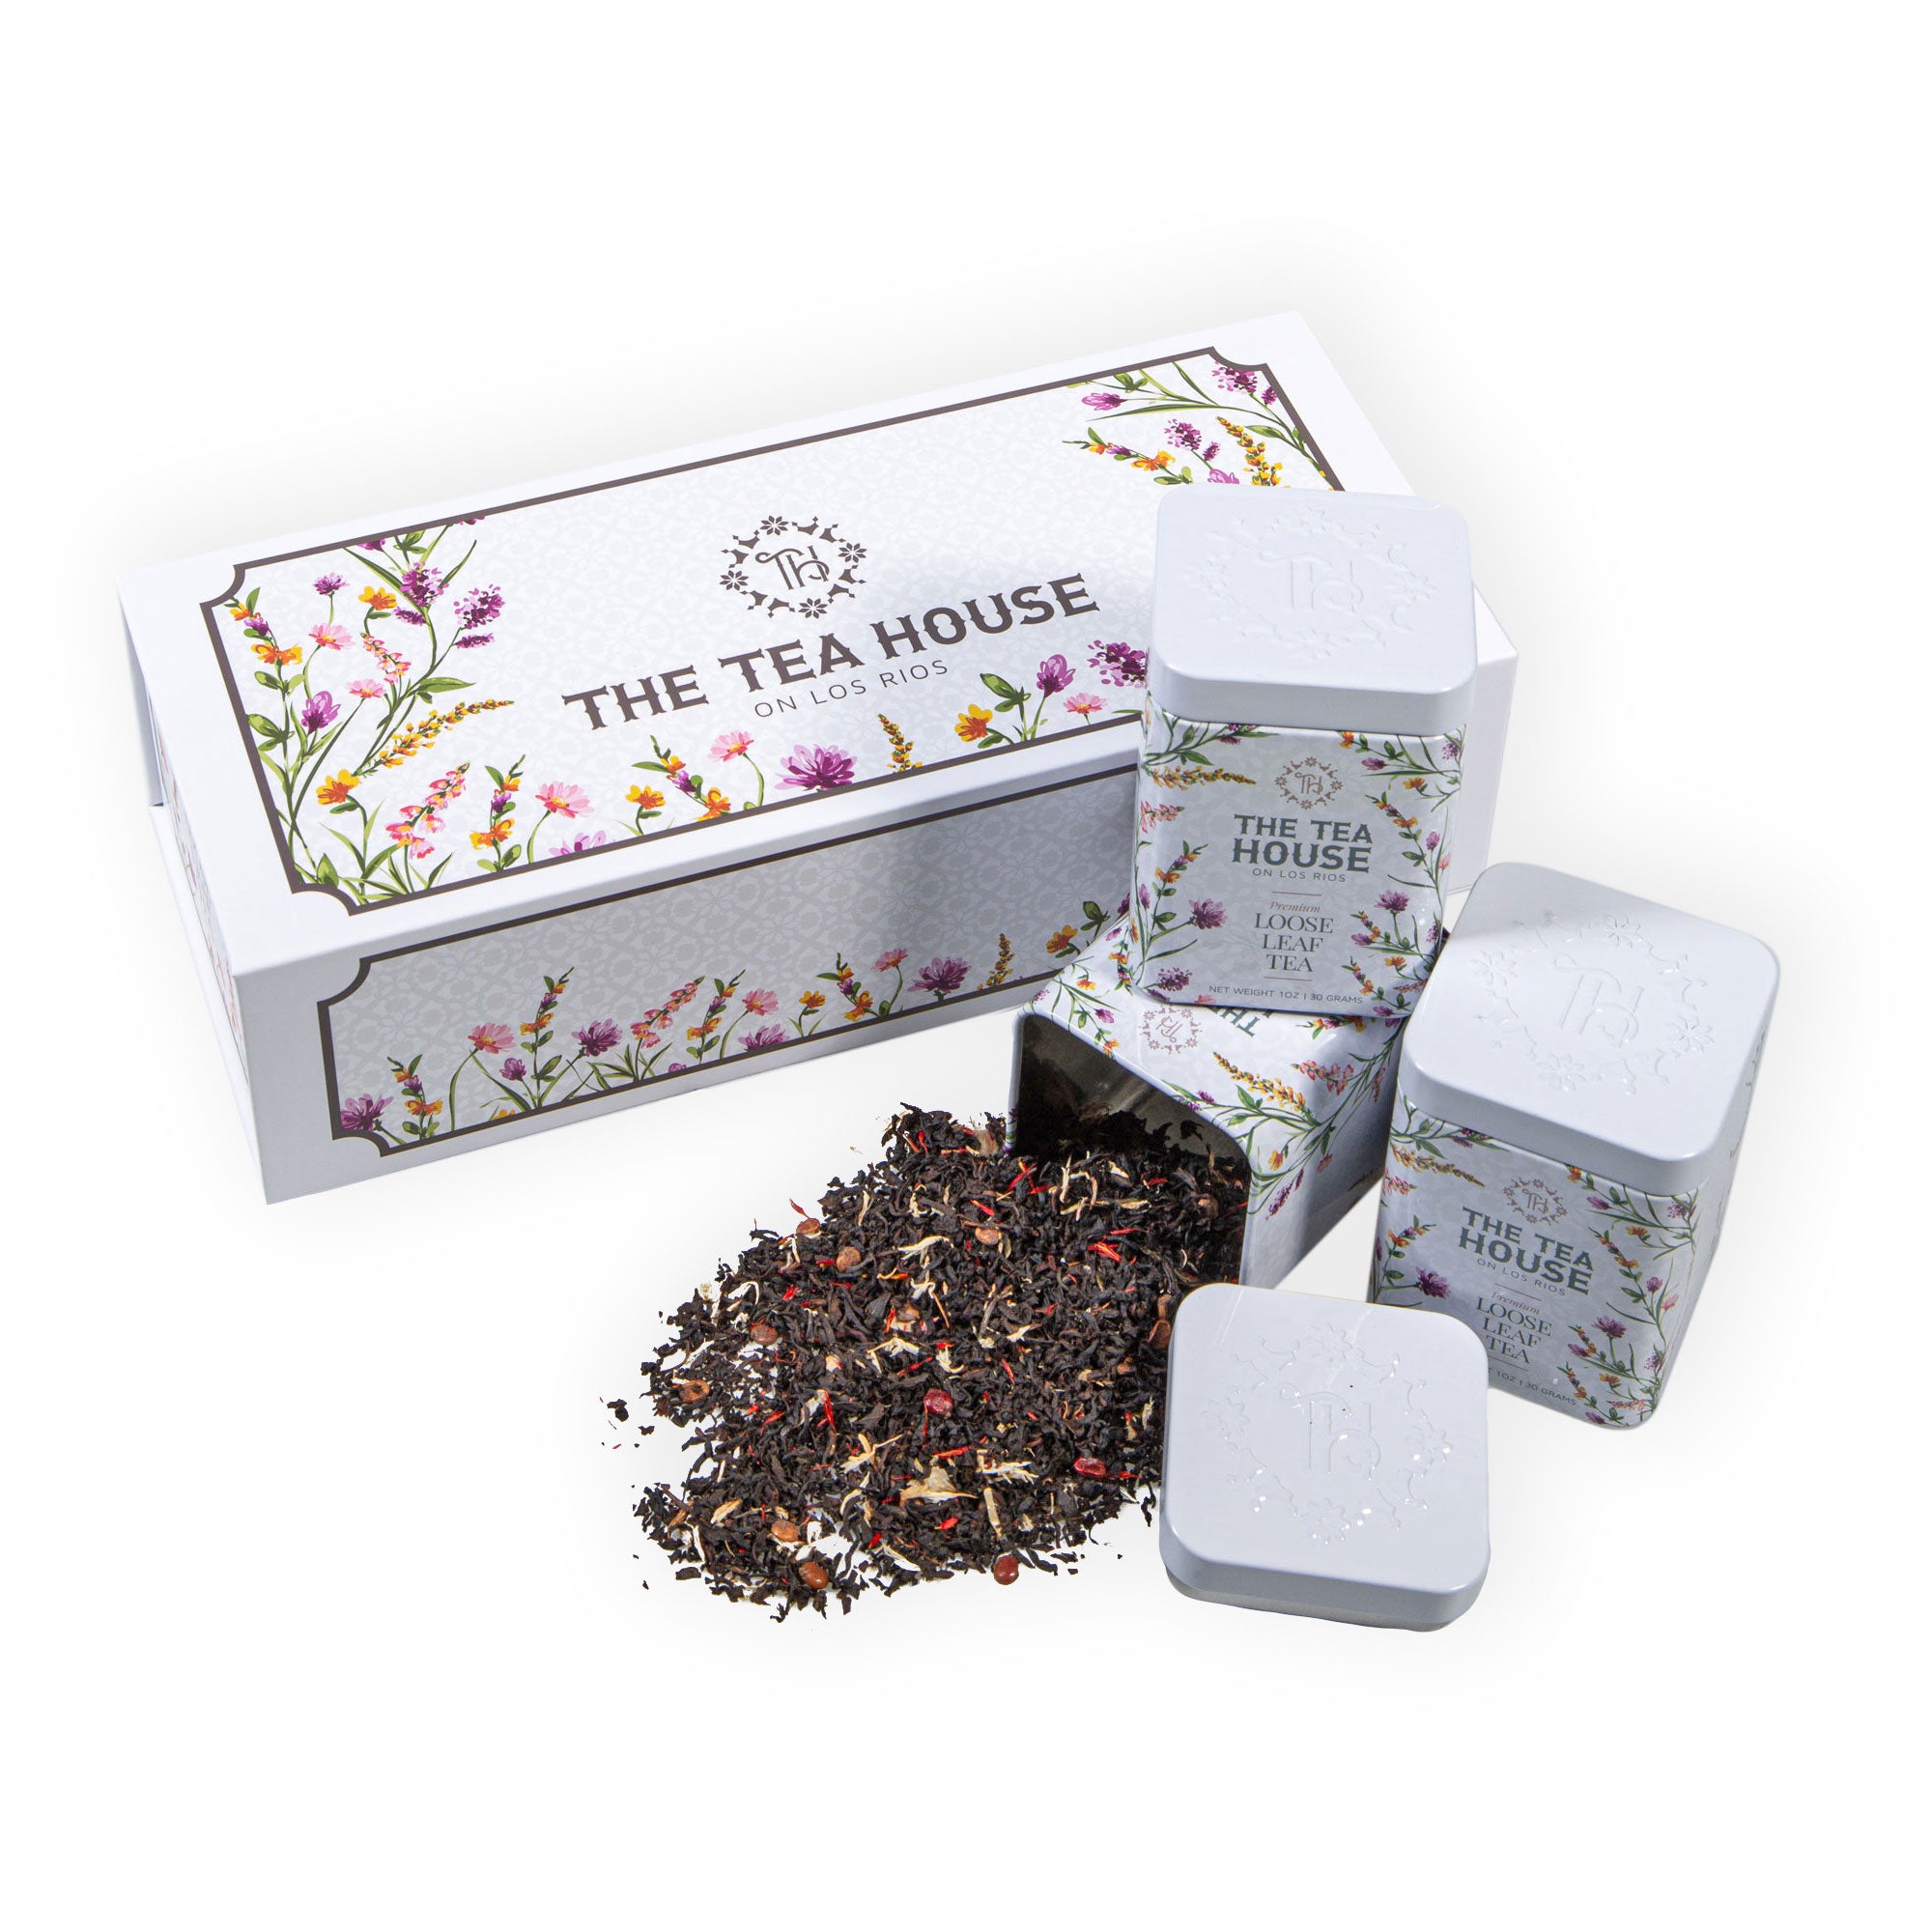 The Tea House on Los Rios custom gift box featuring three of our loose leaf tea tins